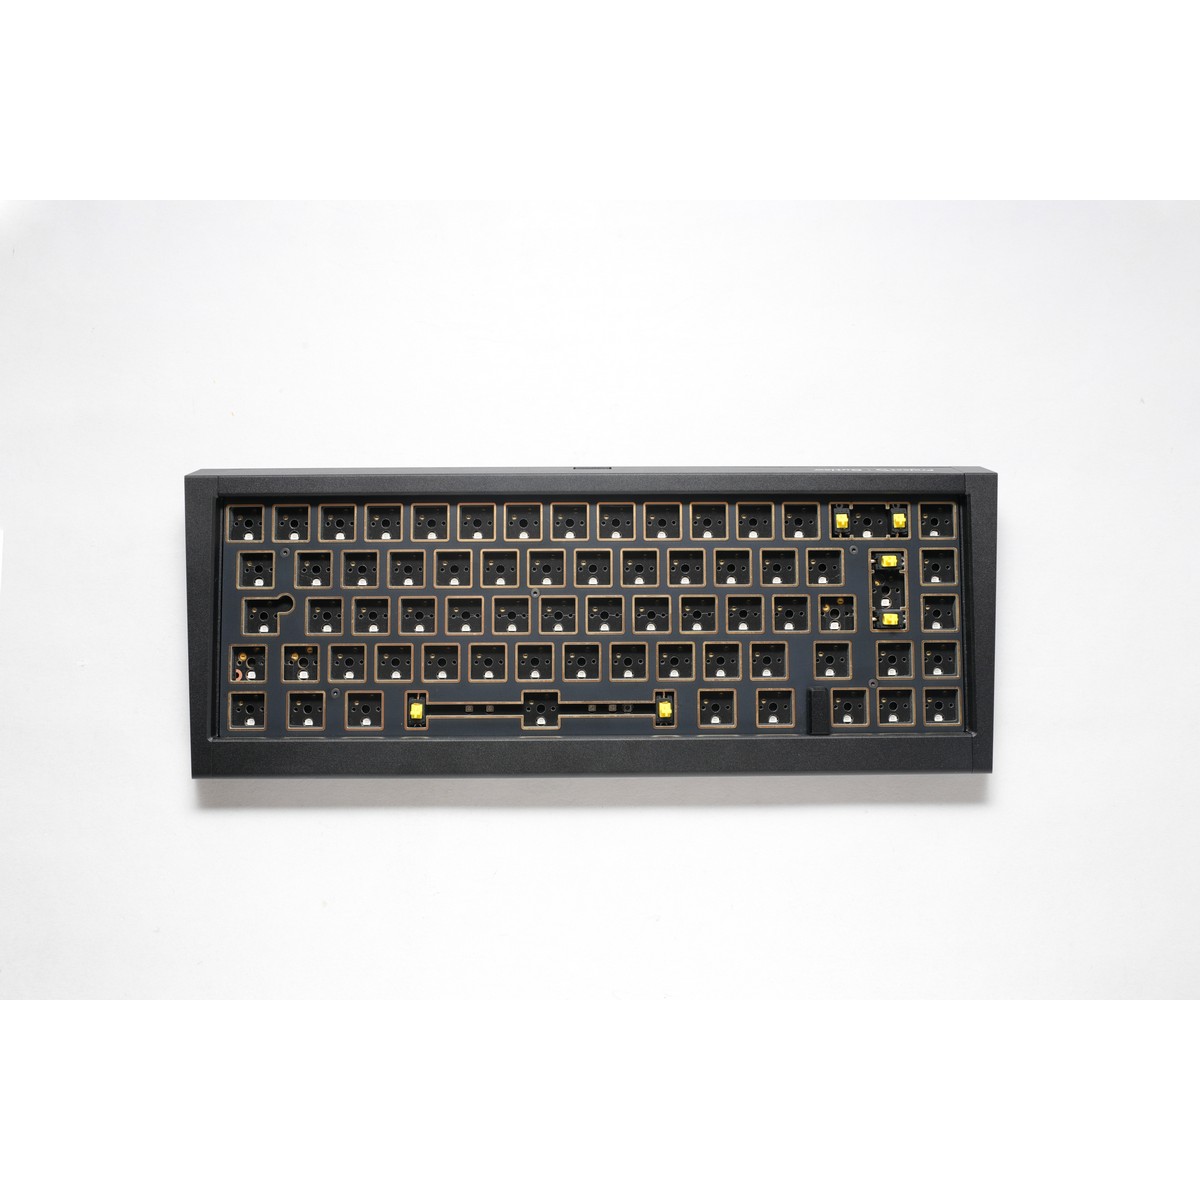 Ducky ProjectD Outlaw65 Barebone Custom Keyboard - Black (First Edition)